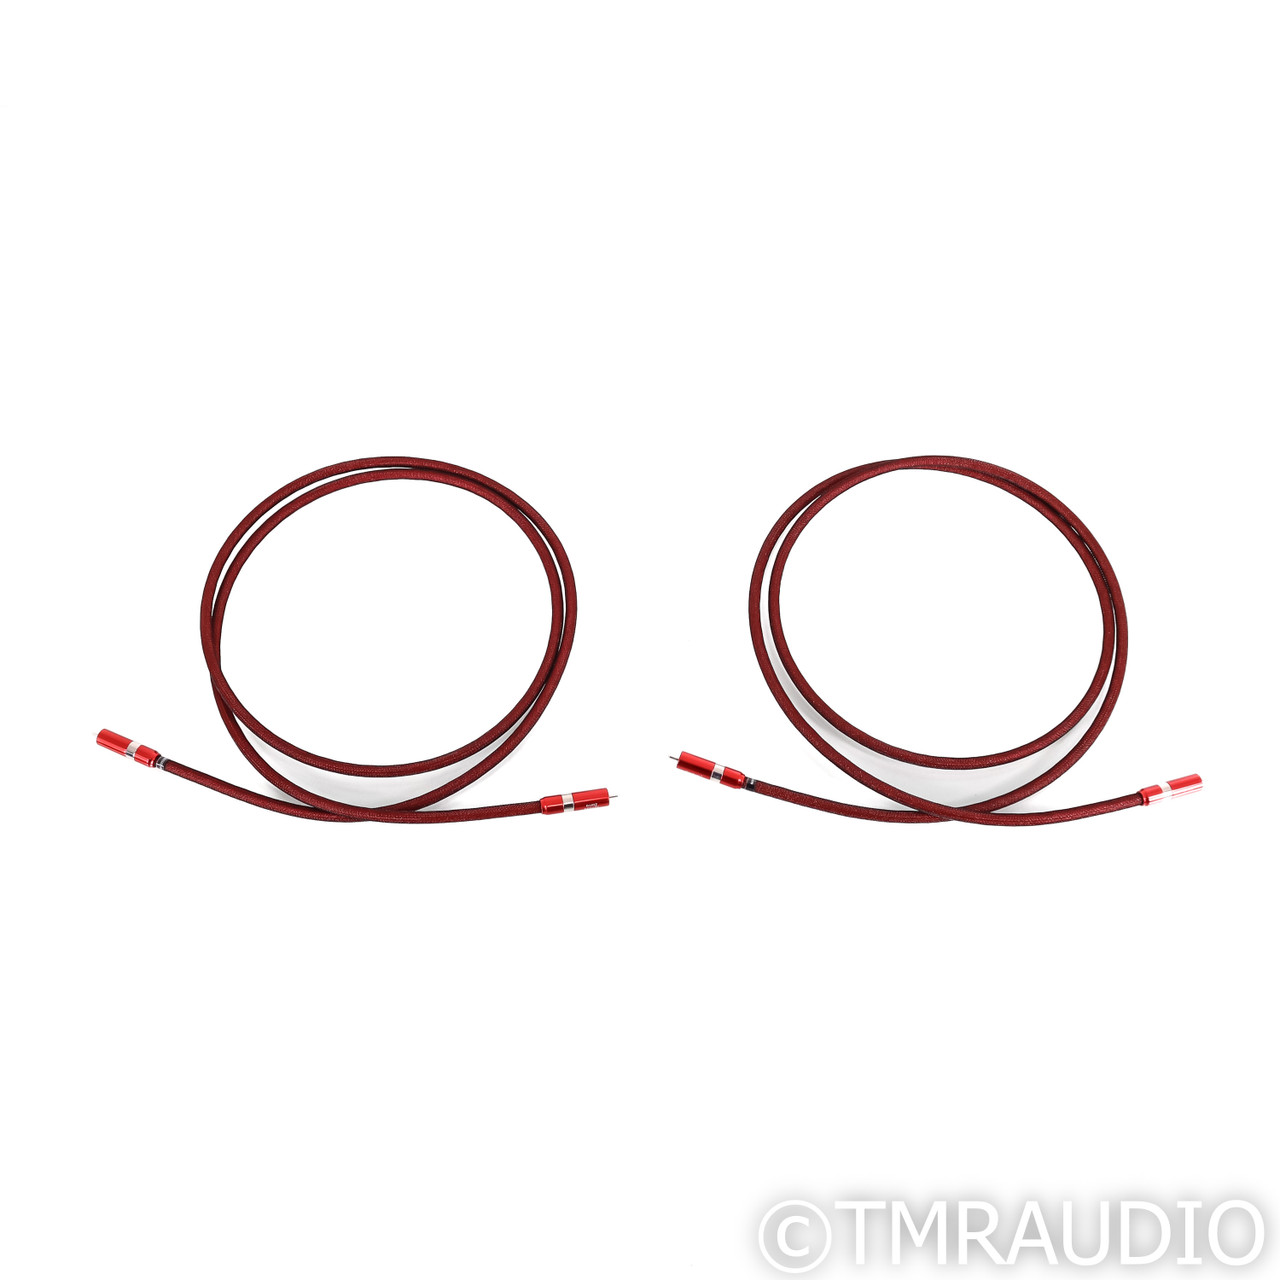 ZenSati Zorro RCA Cables; 2m Pair Interconnects (57396) 2